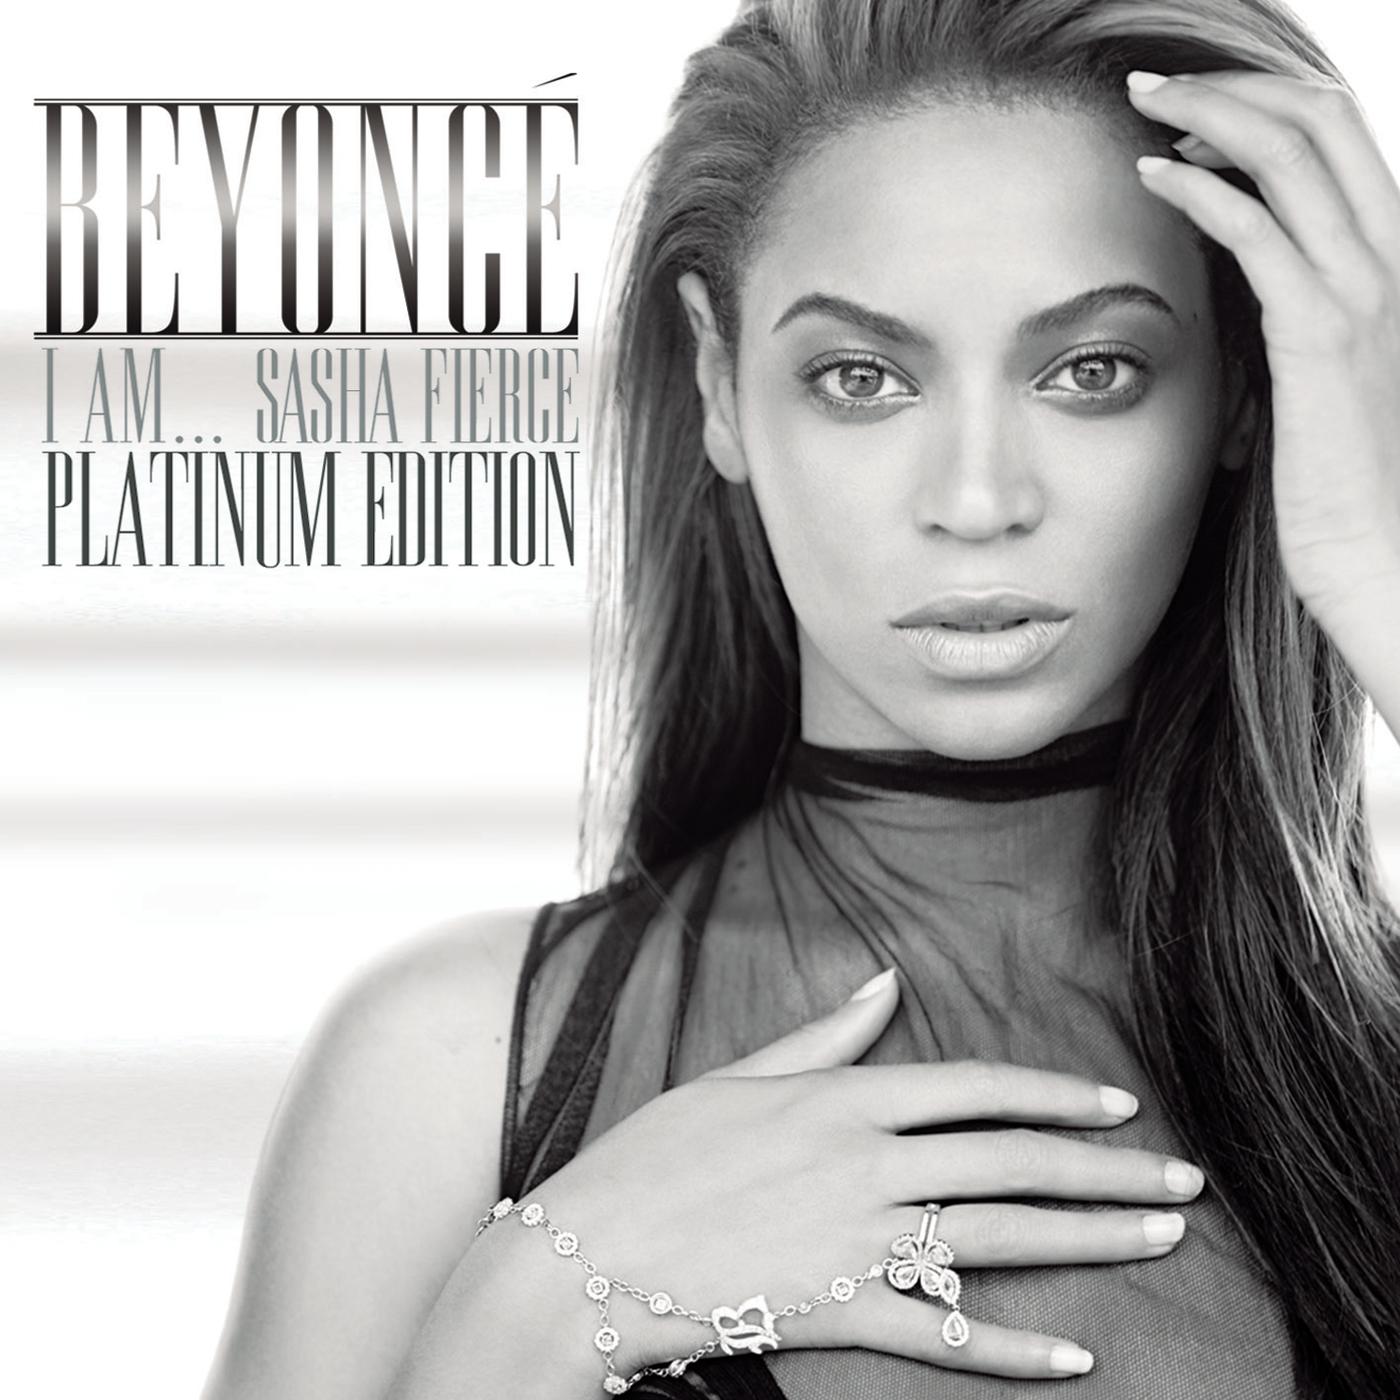 Beyonce碧昂斯-《I Am___Sasha Fierce (Platinum Edition)》